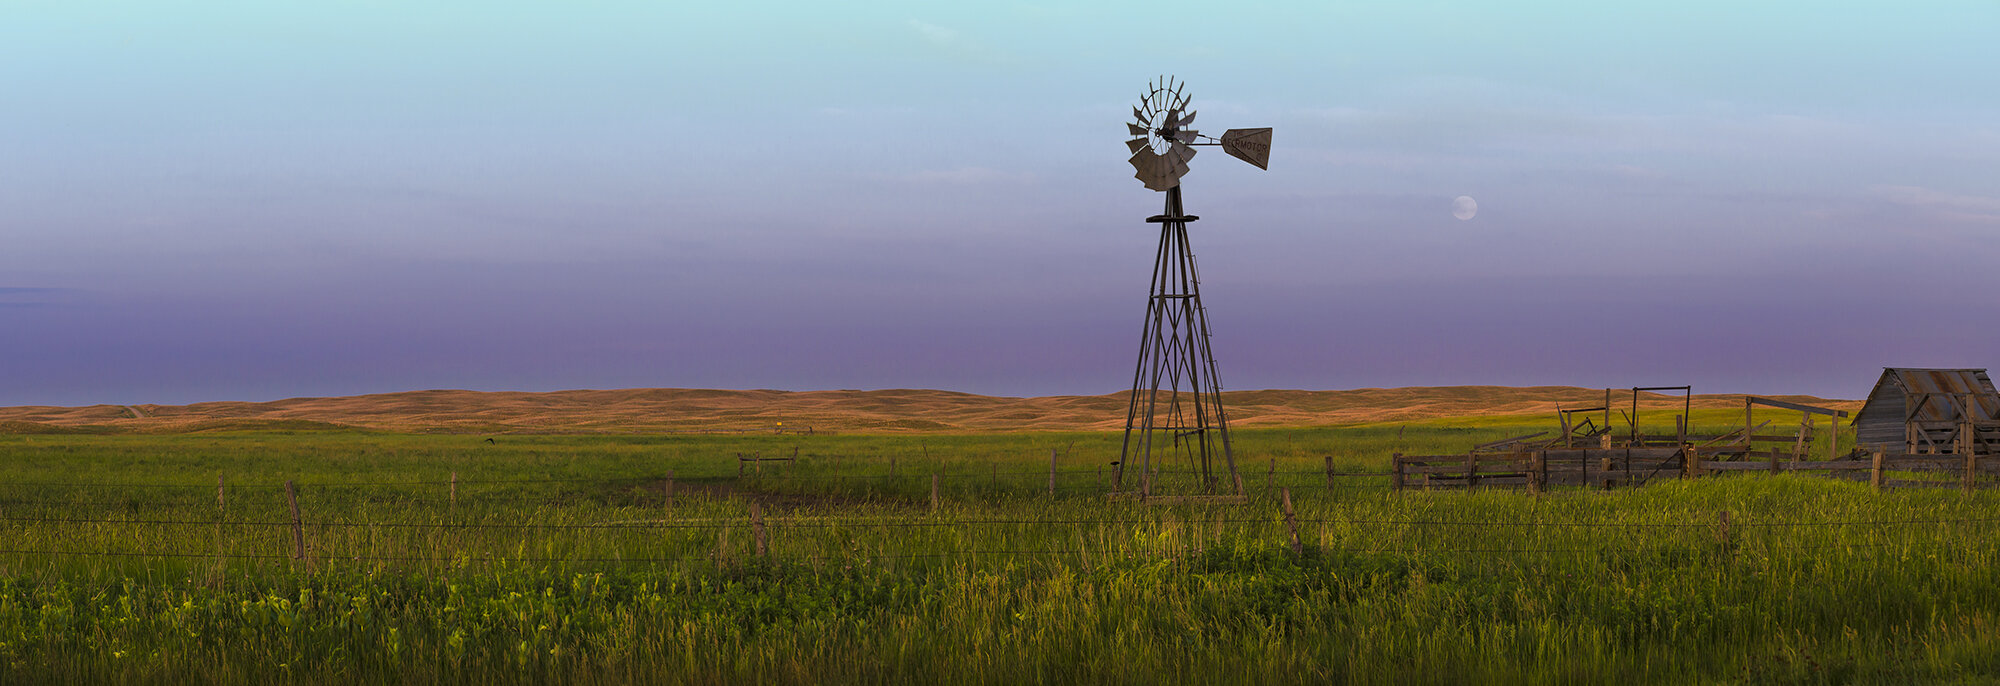 4-Seasons-Western-Nebraska-Sand-Hills-Landscape-With-Windmill-845955970_7200x2469.jpg